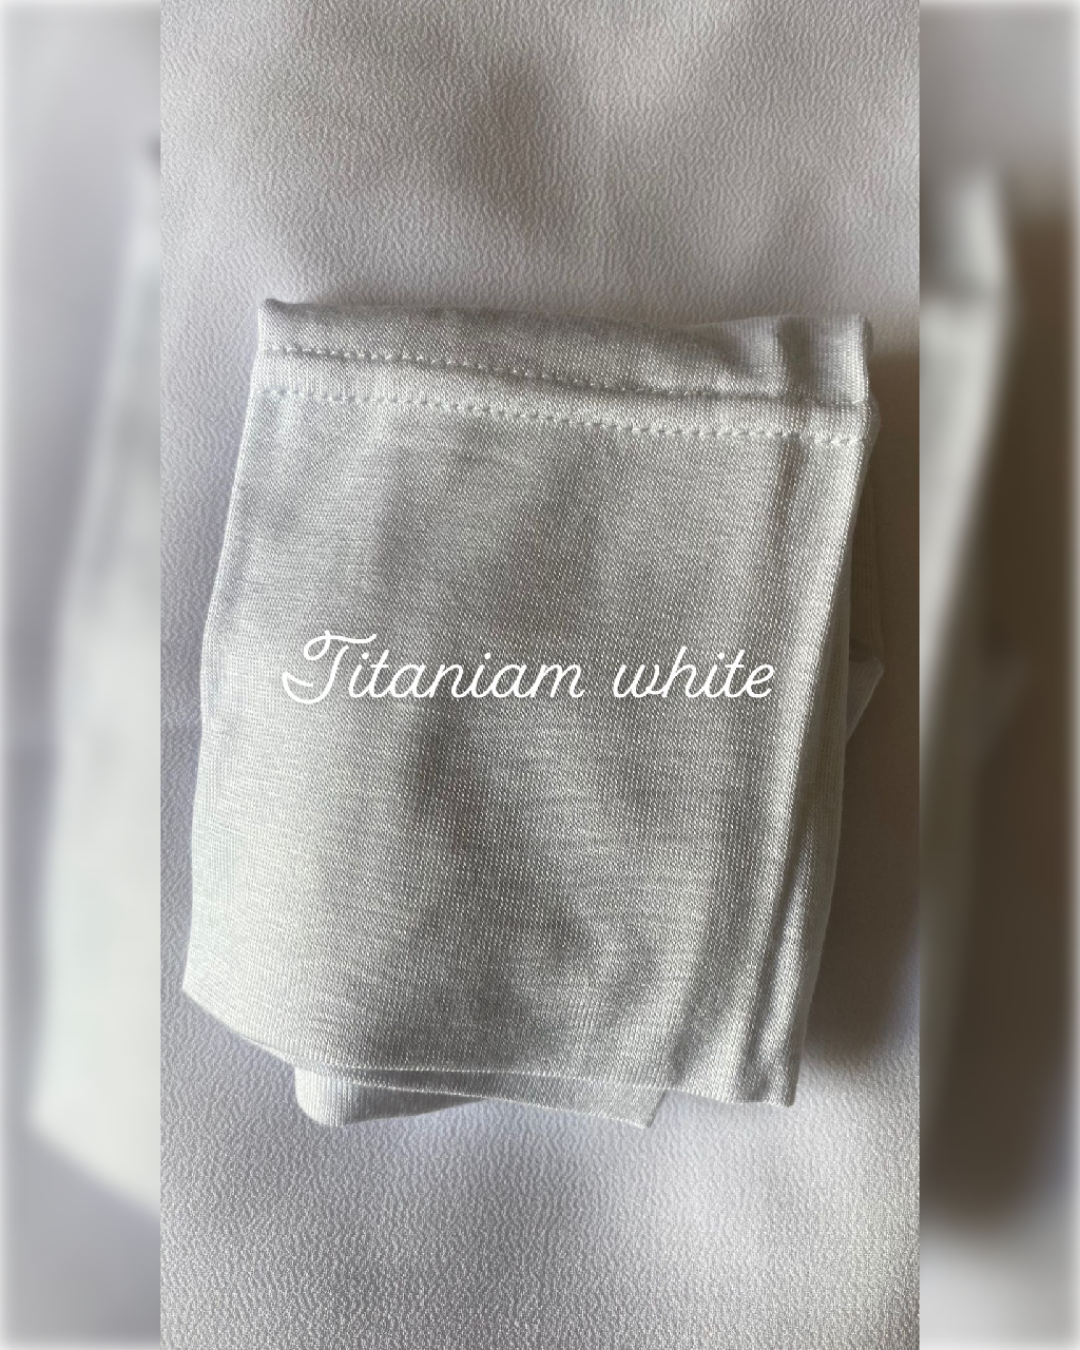 Plain Georgette Hijab Set in Beautifull White Shade مجموعة حجاب الجورجيت باللون الأبيض الجميل